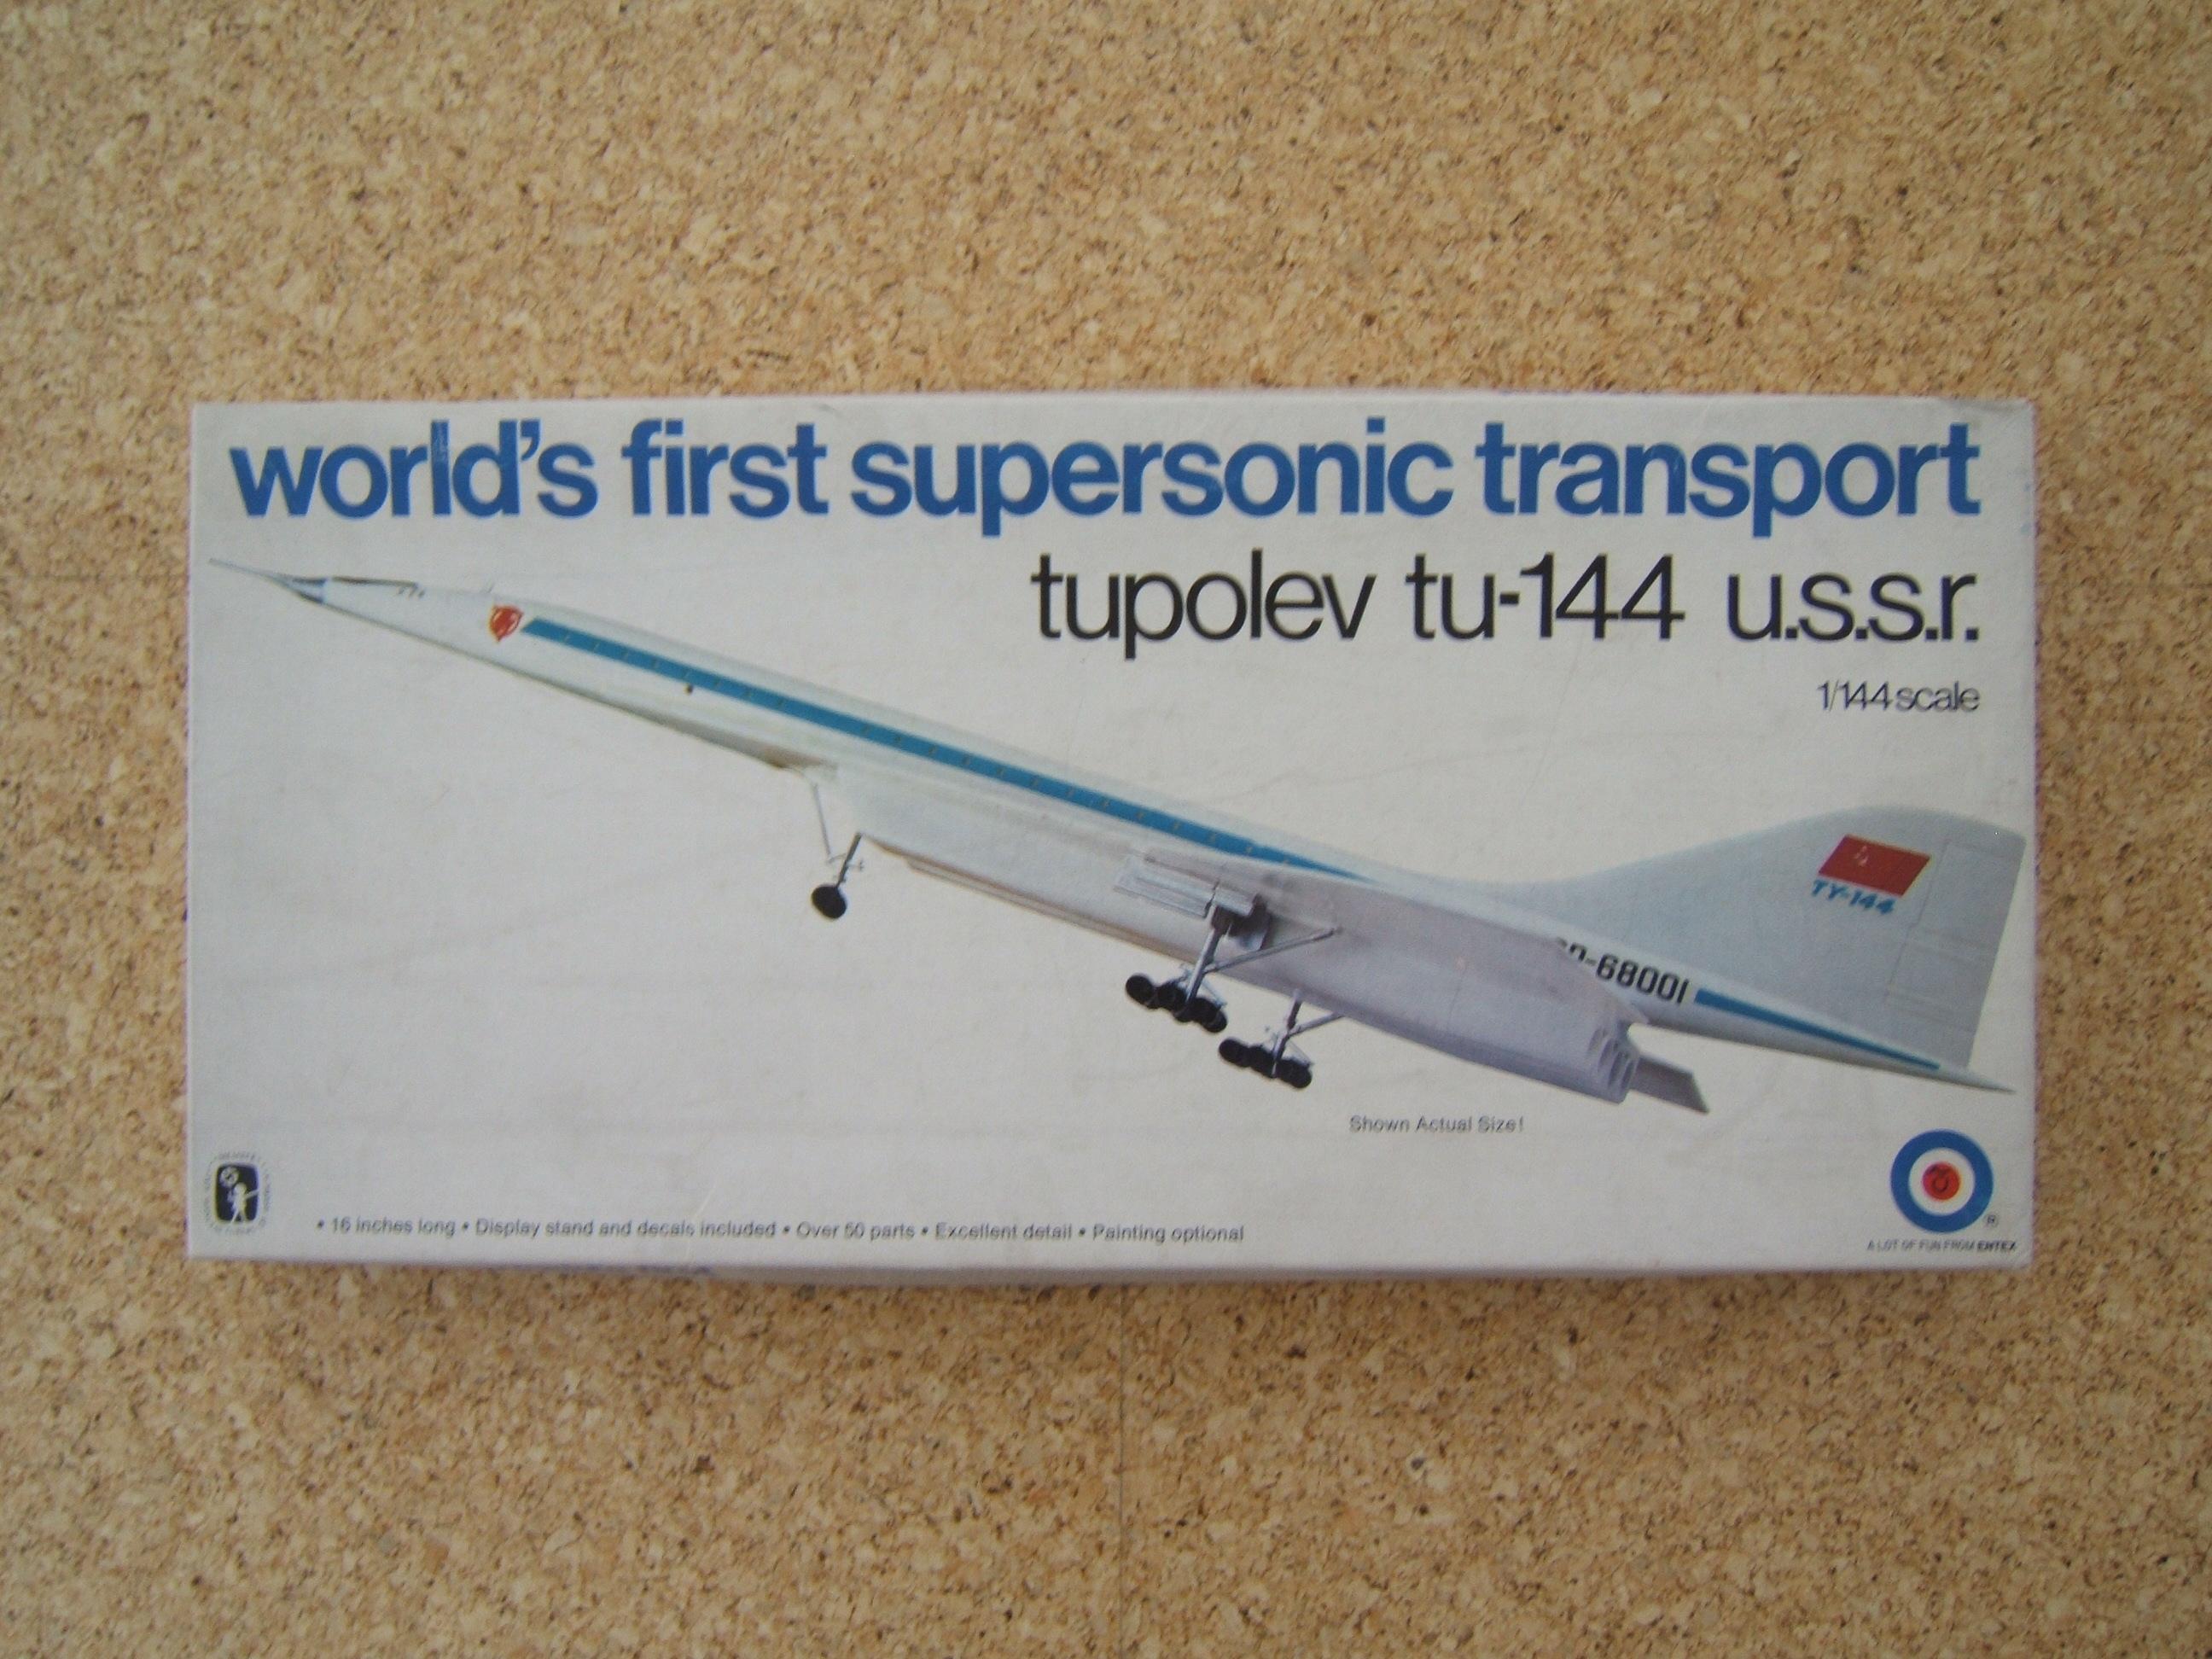 Tu144 Entex

Tu144